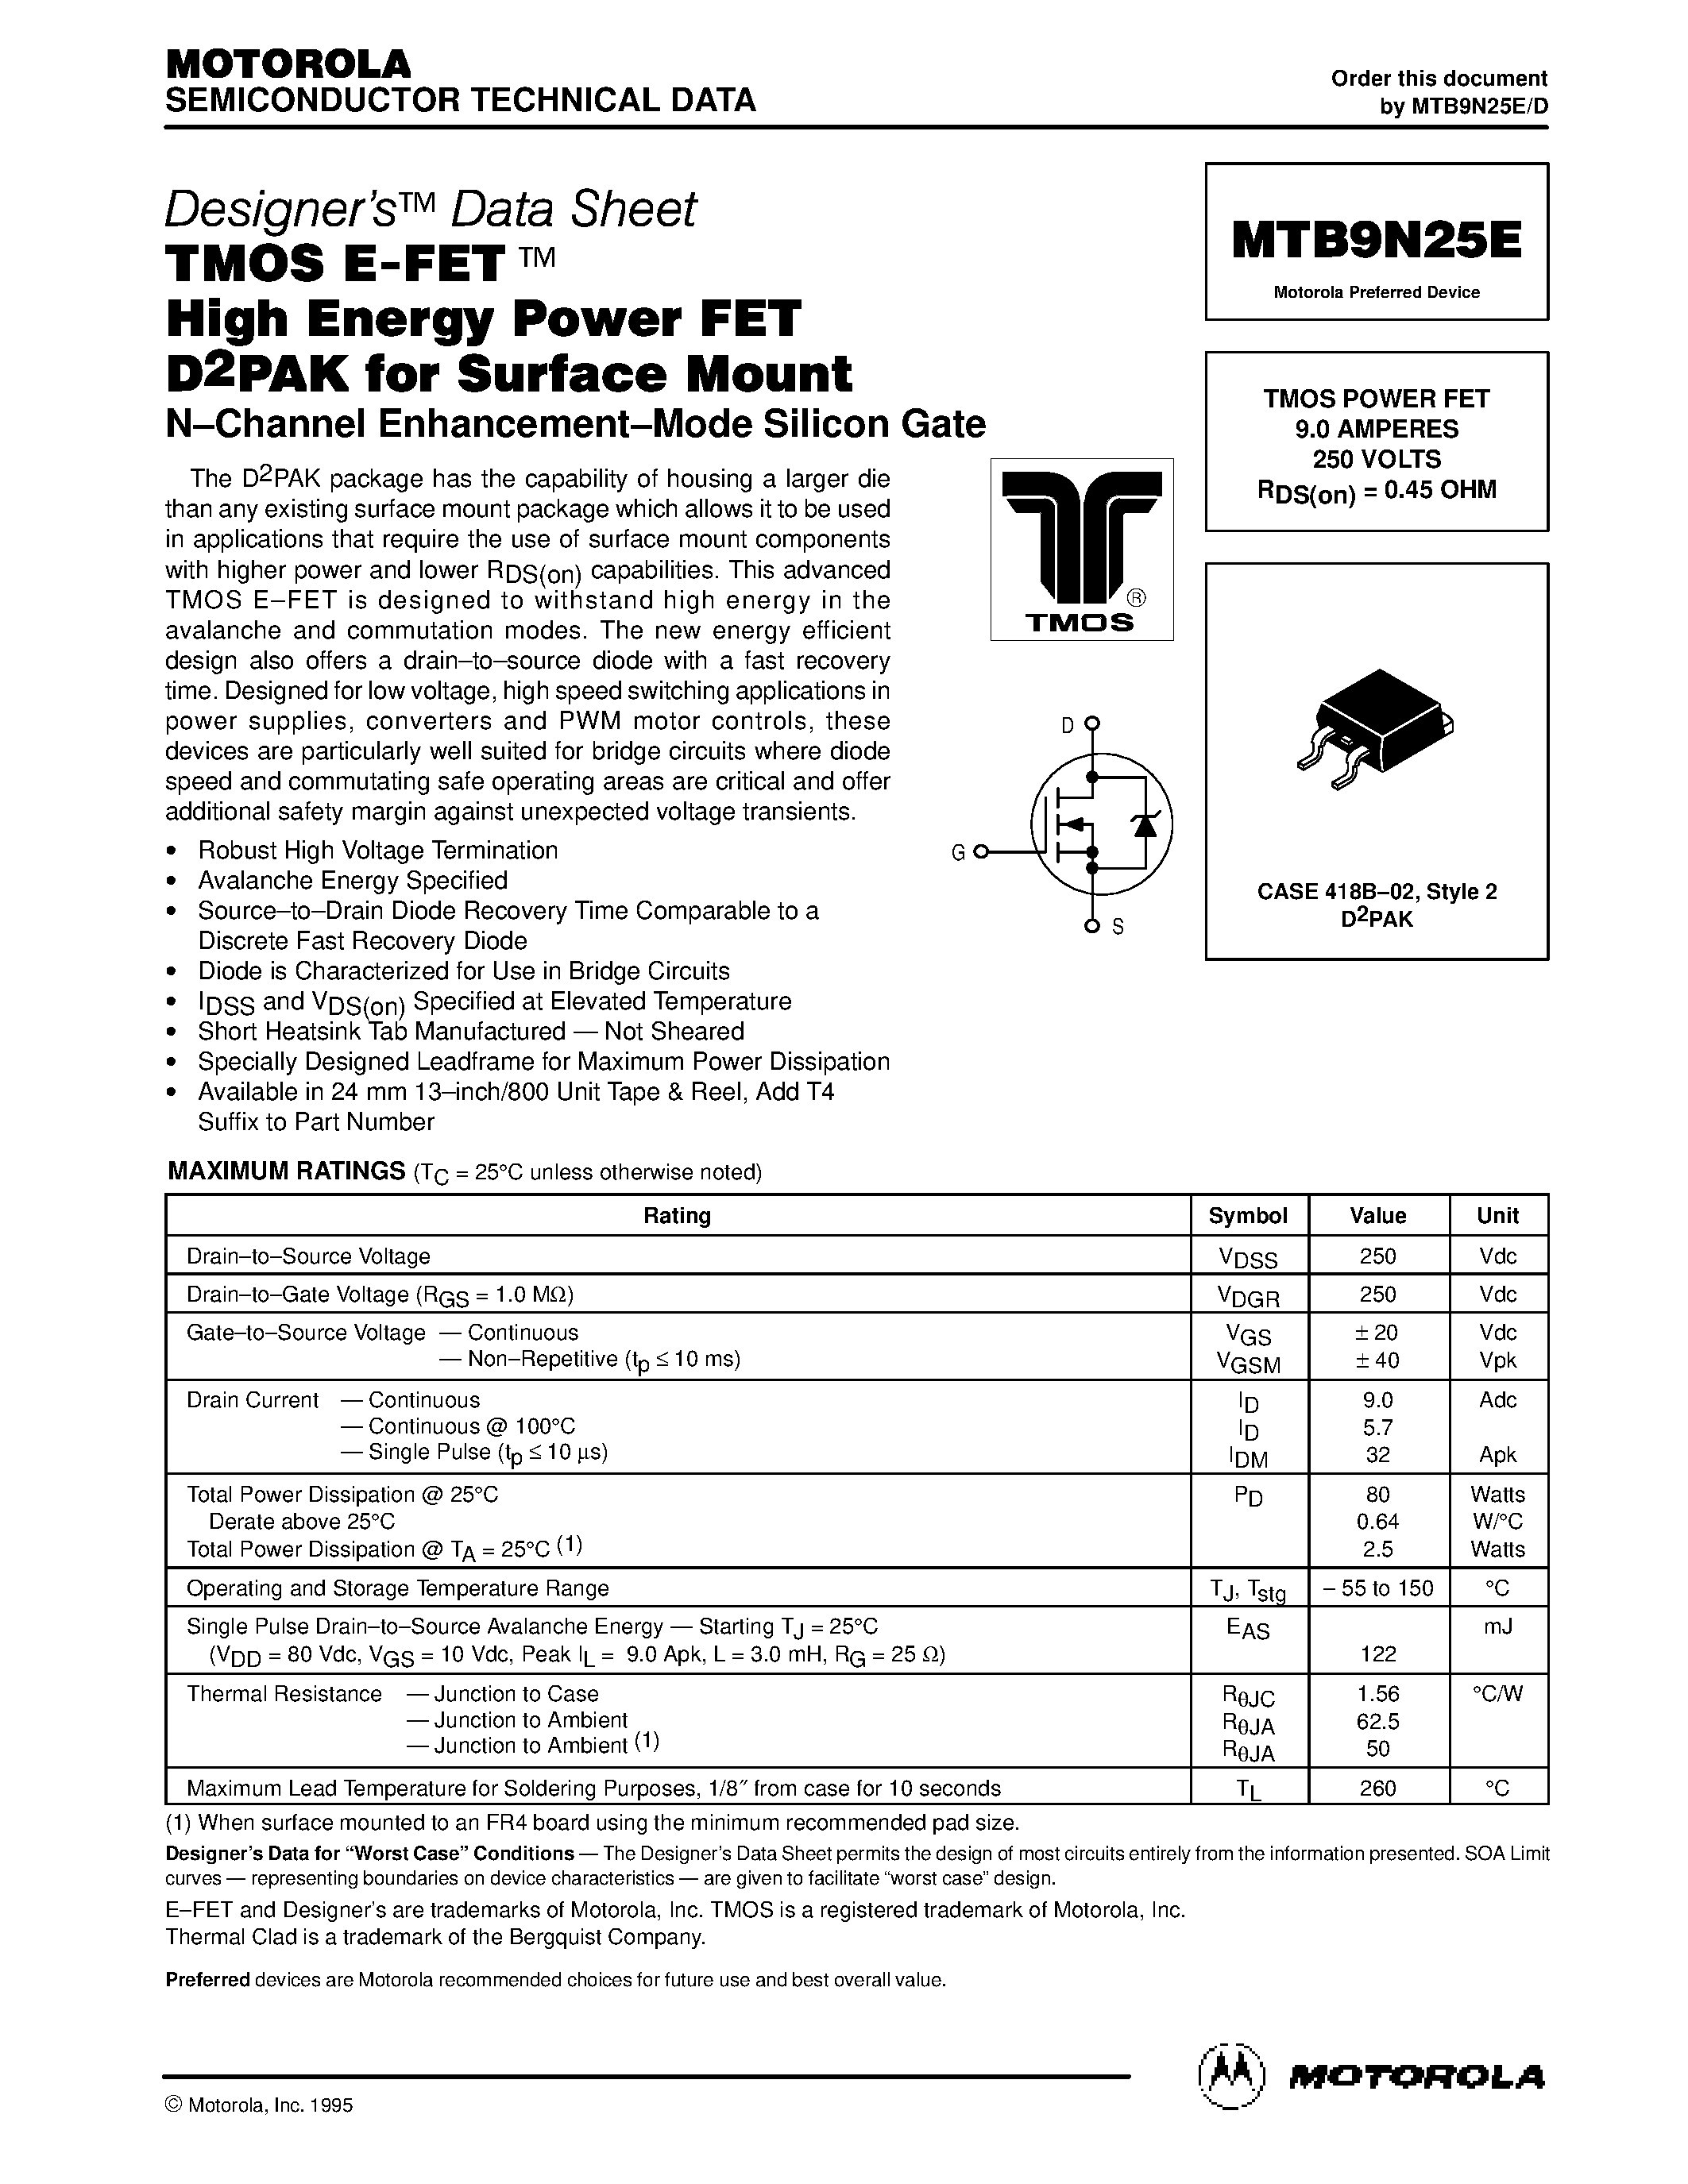 Datasheet MTB9N25E - TMOS POWER FET 9.0 AMPERES 250 VOLTS page 1